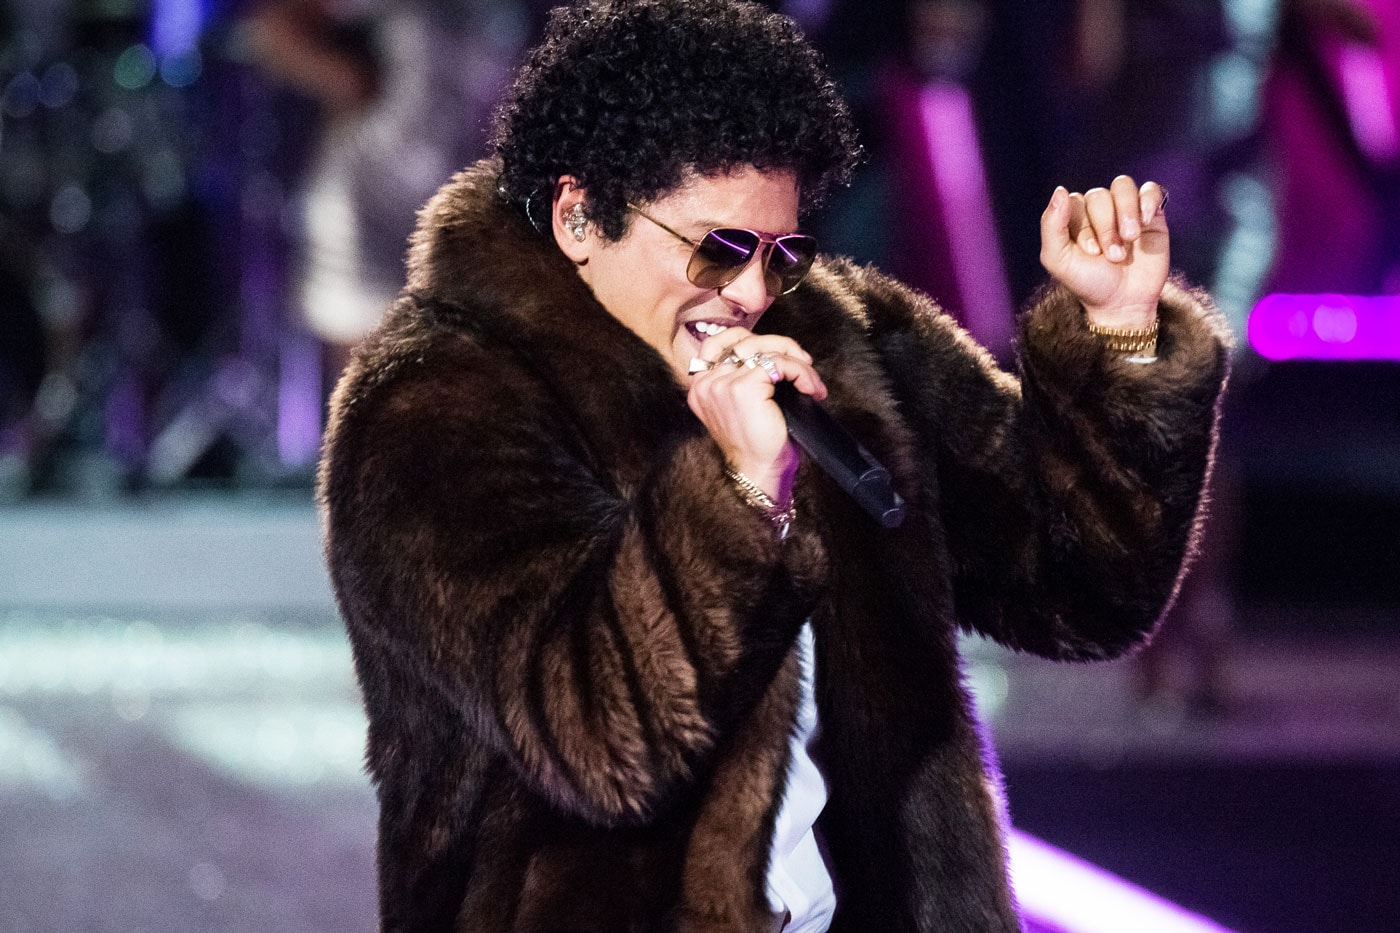 Bruno Mars Channels Michael Jackson & Prince in "Versace On The Floor" New Single 24K Magic Pop Ballad